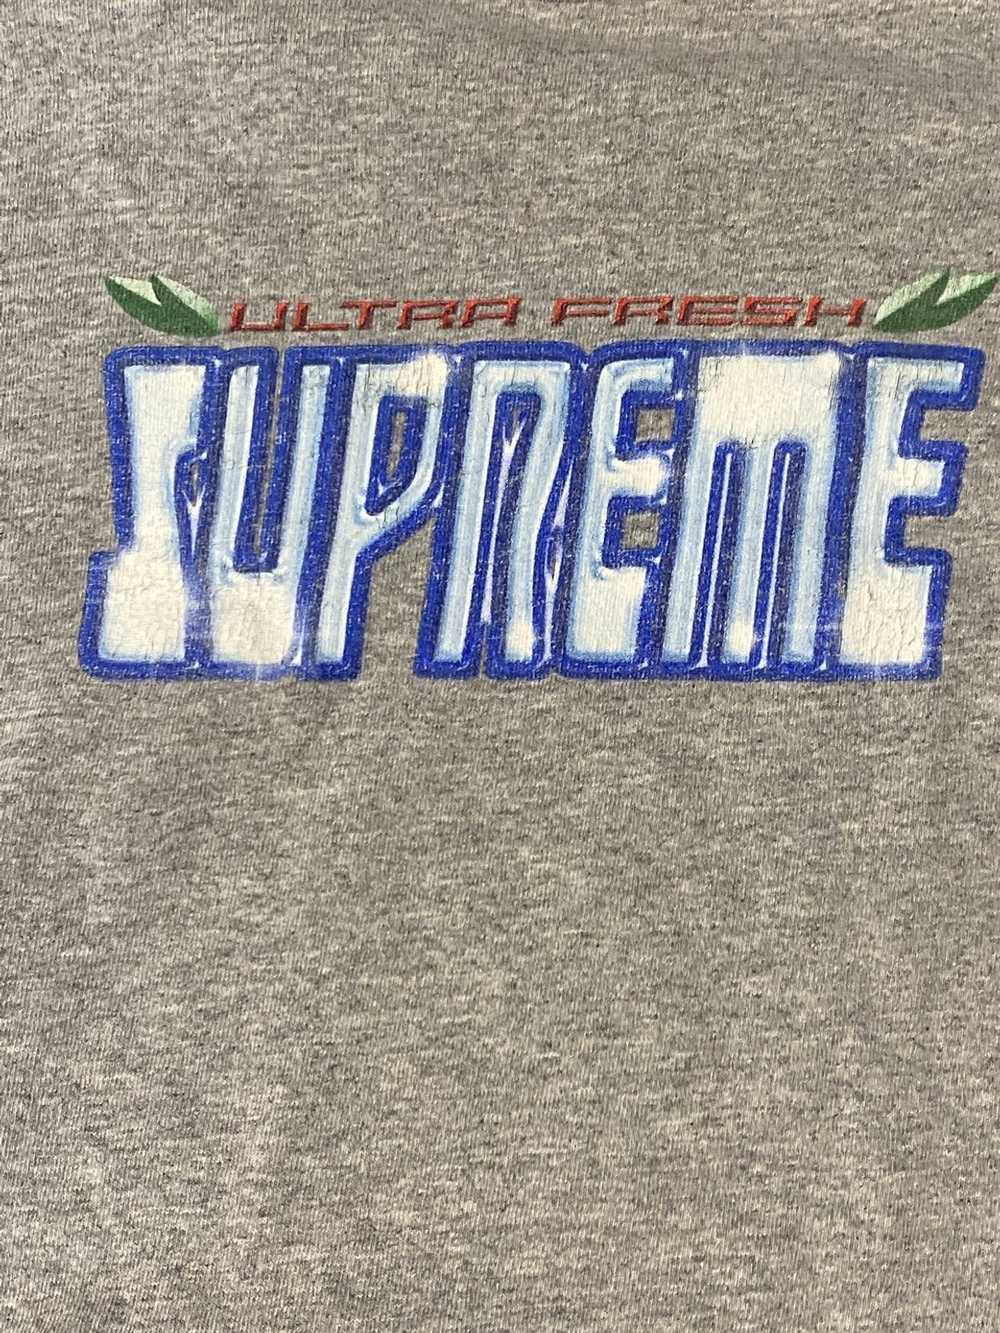 Supreme Ultra fresh supreme tee - image 2